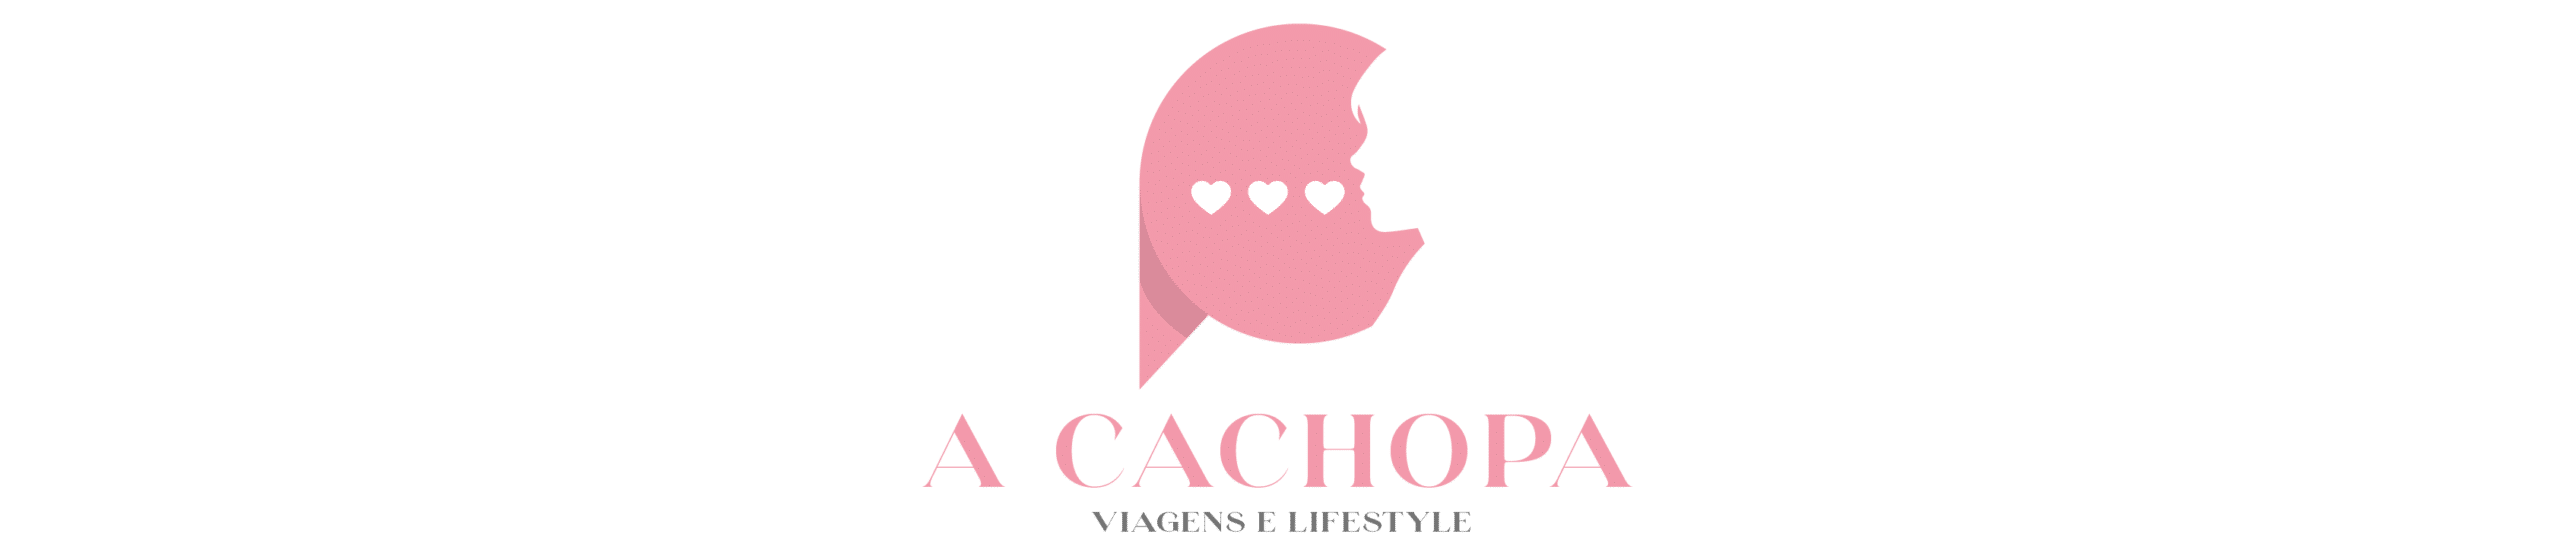 A Cachopa